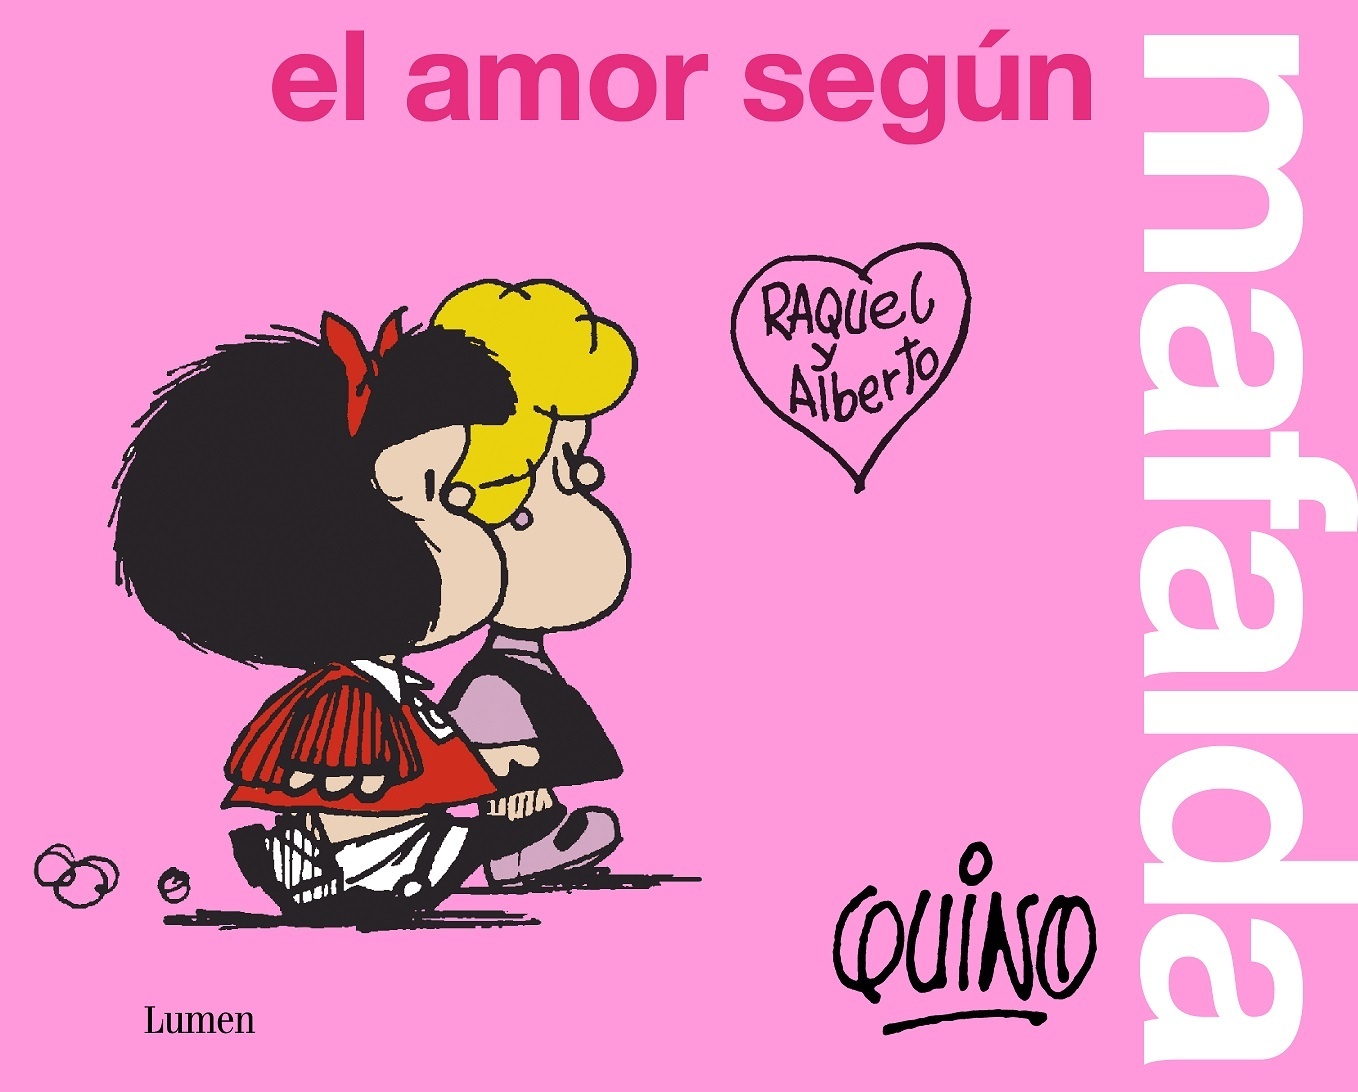 Amor según Mafalda, El